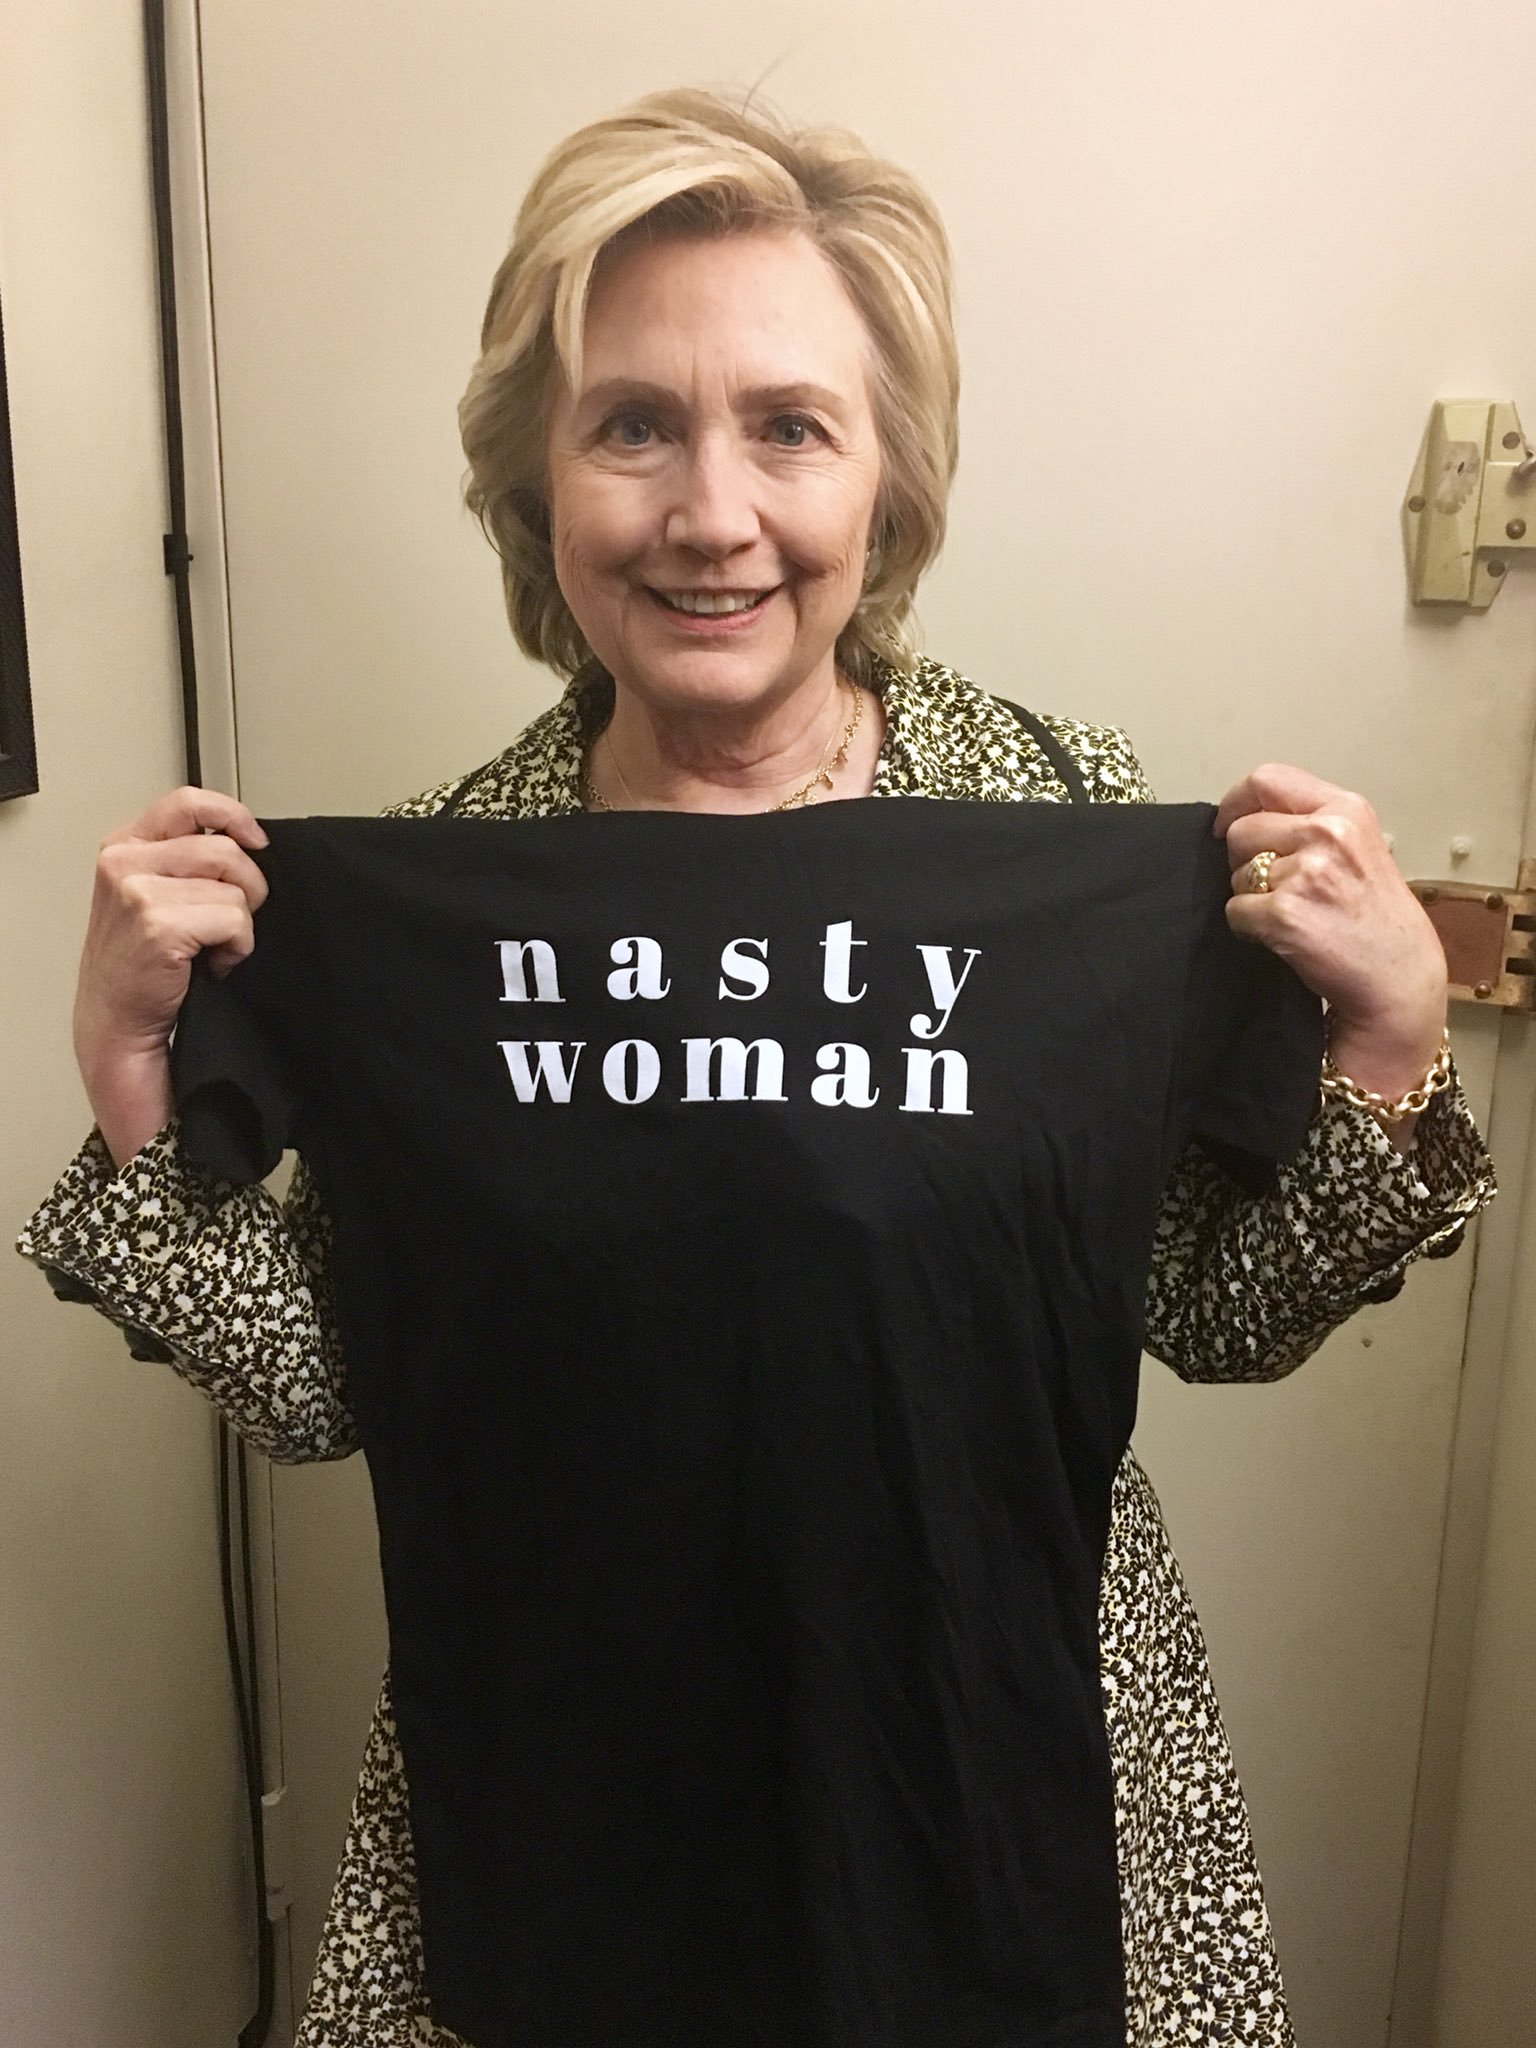 Hillary Clinton/Twitter